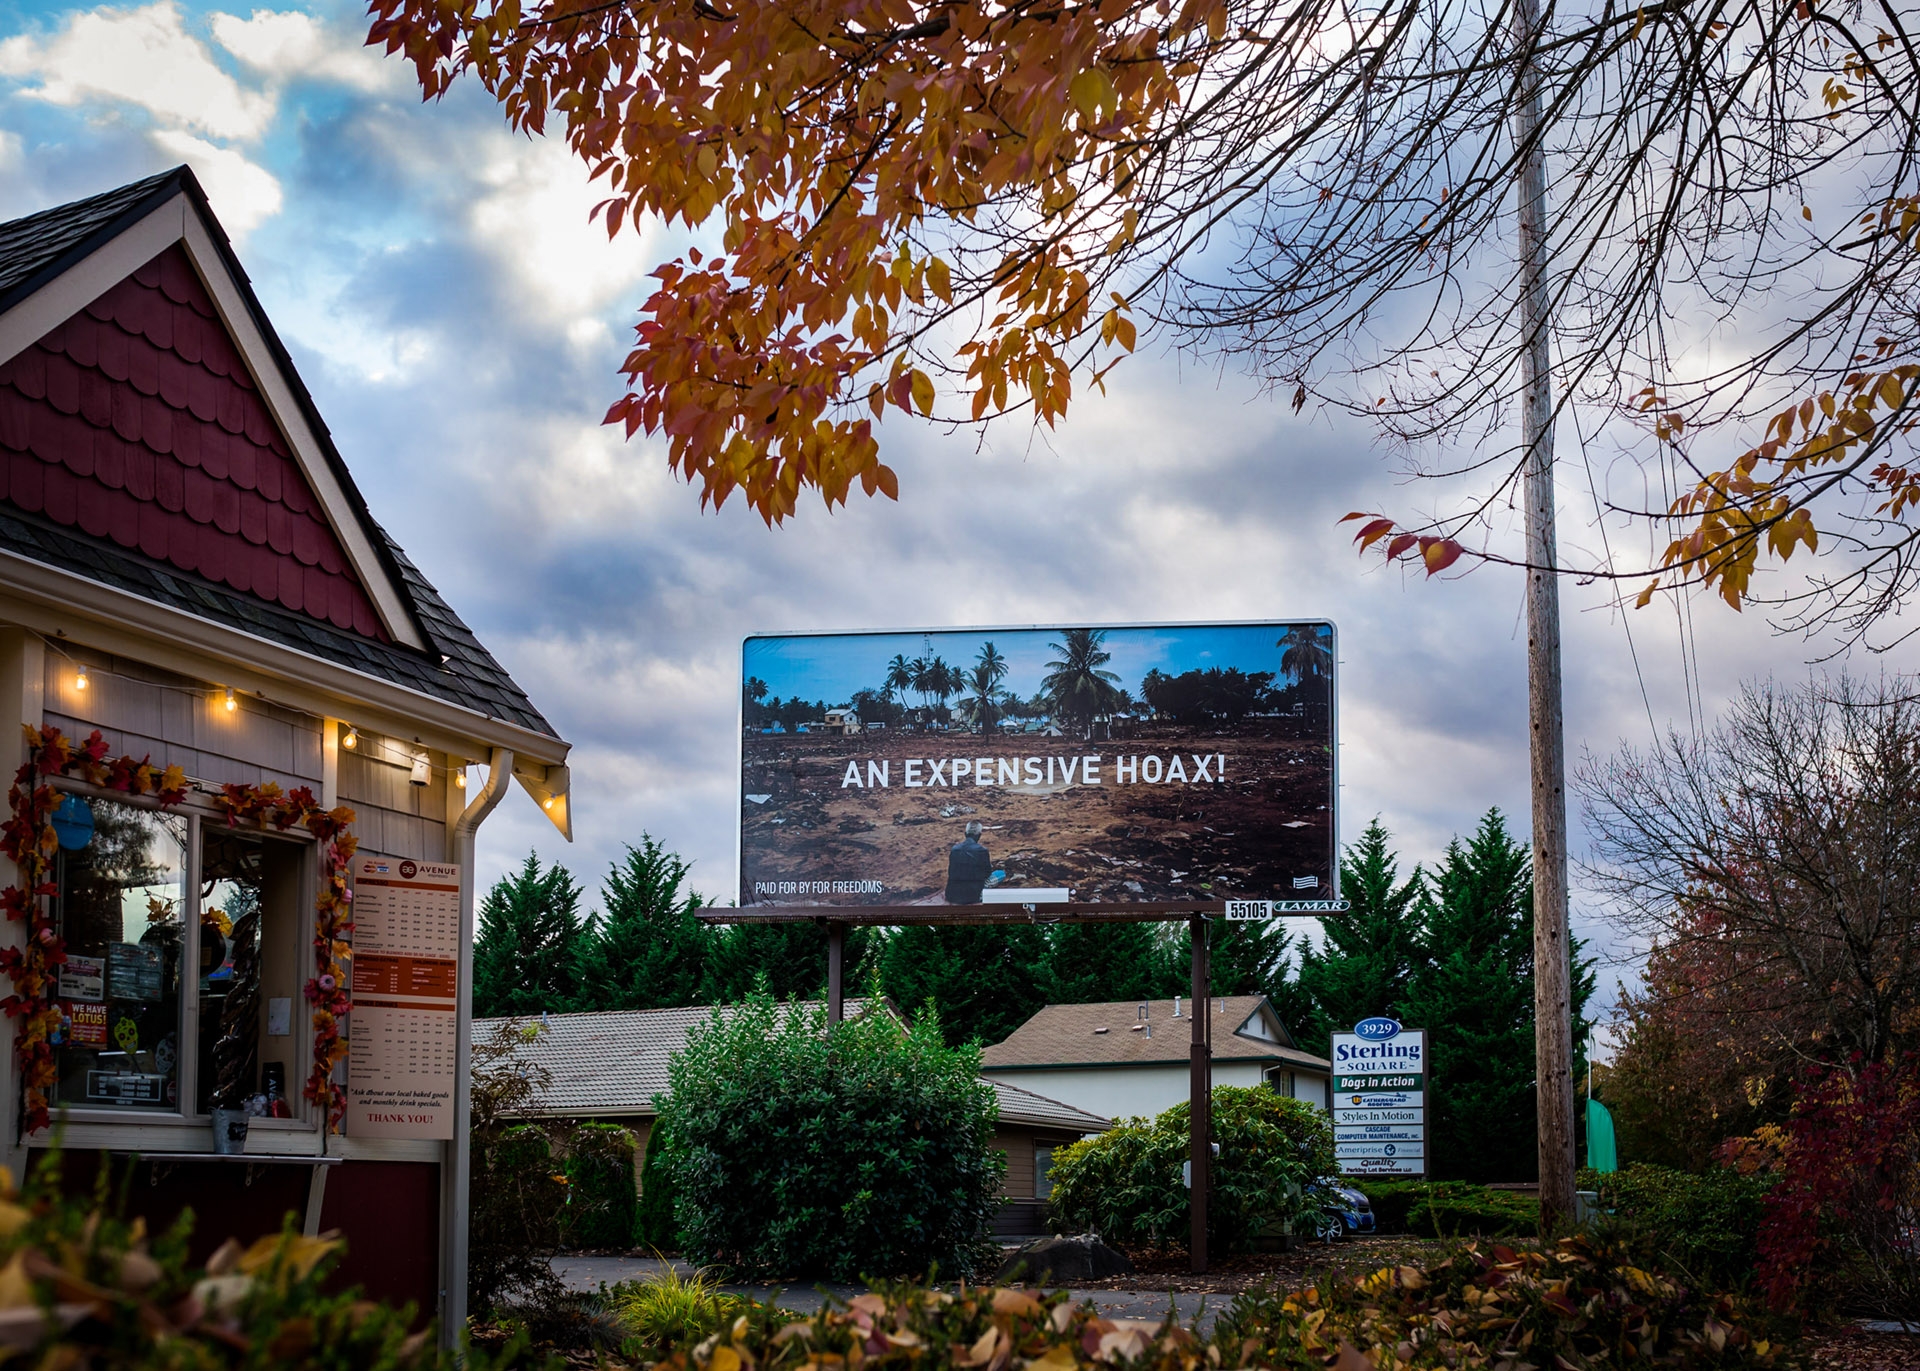 Billboard in Olympia Washington by artist Wyatt Gallery, entitled "An Expensive Hoax"